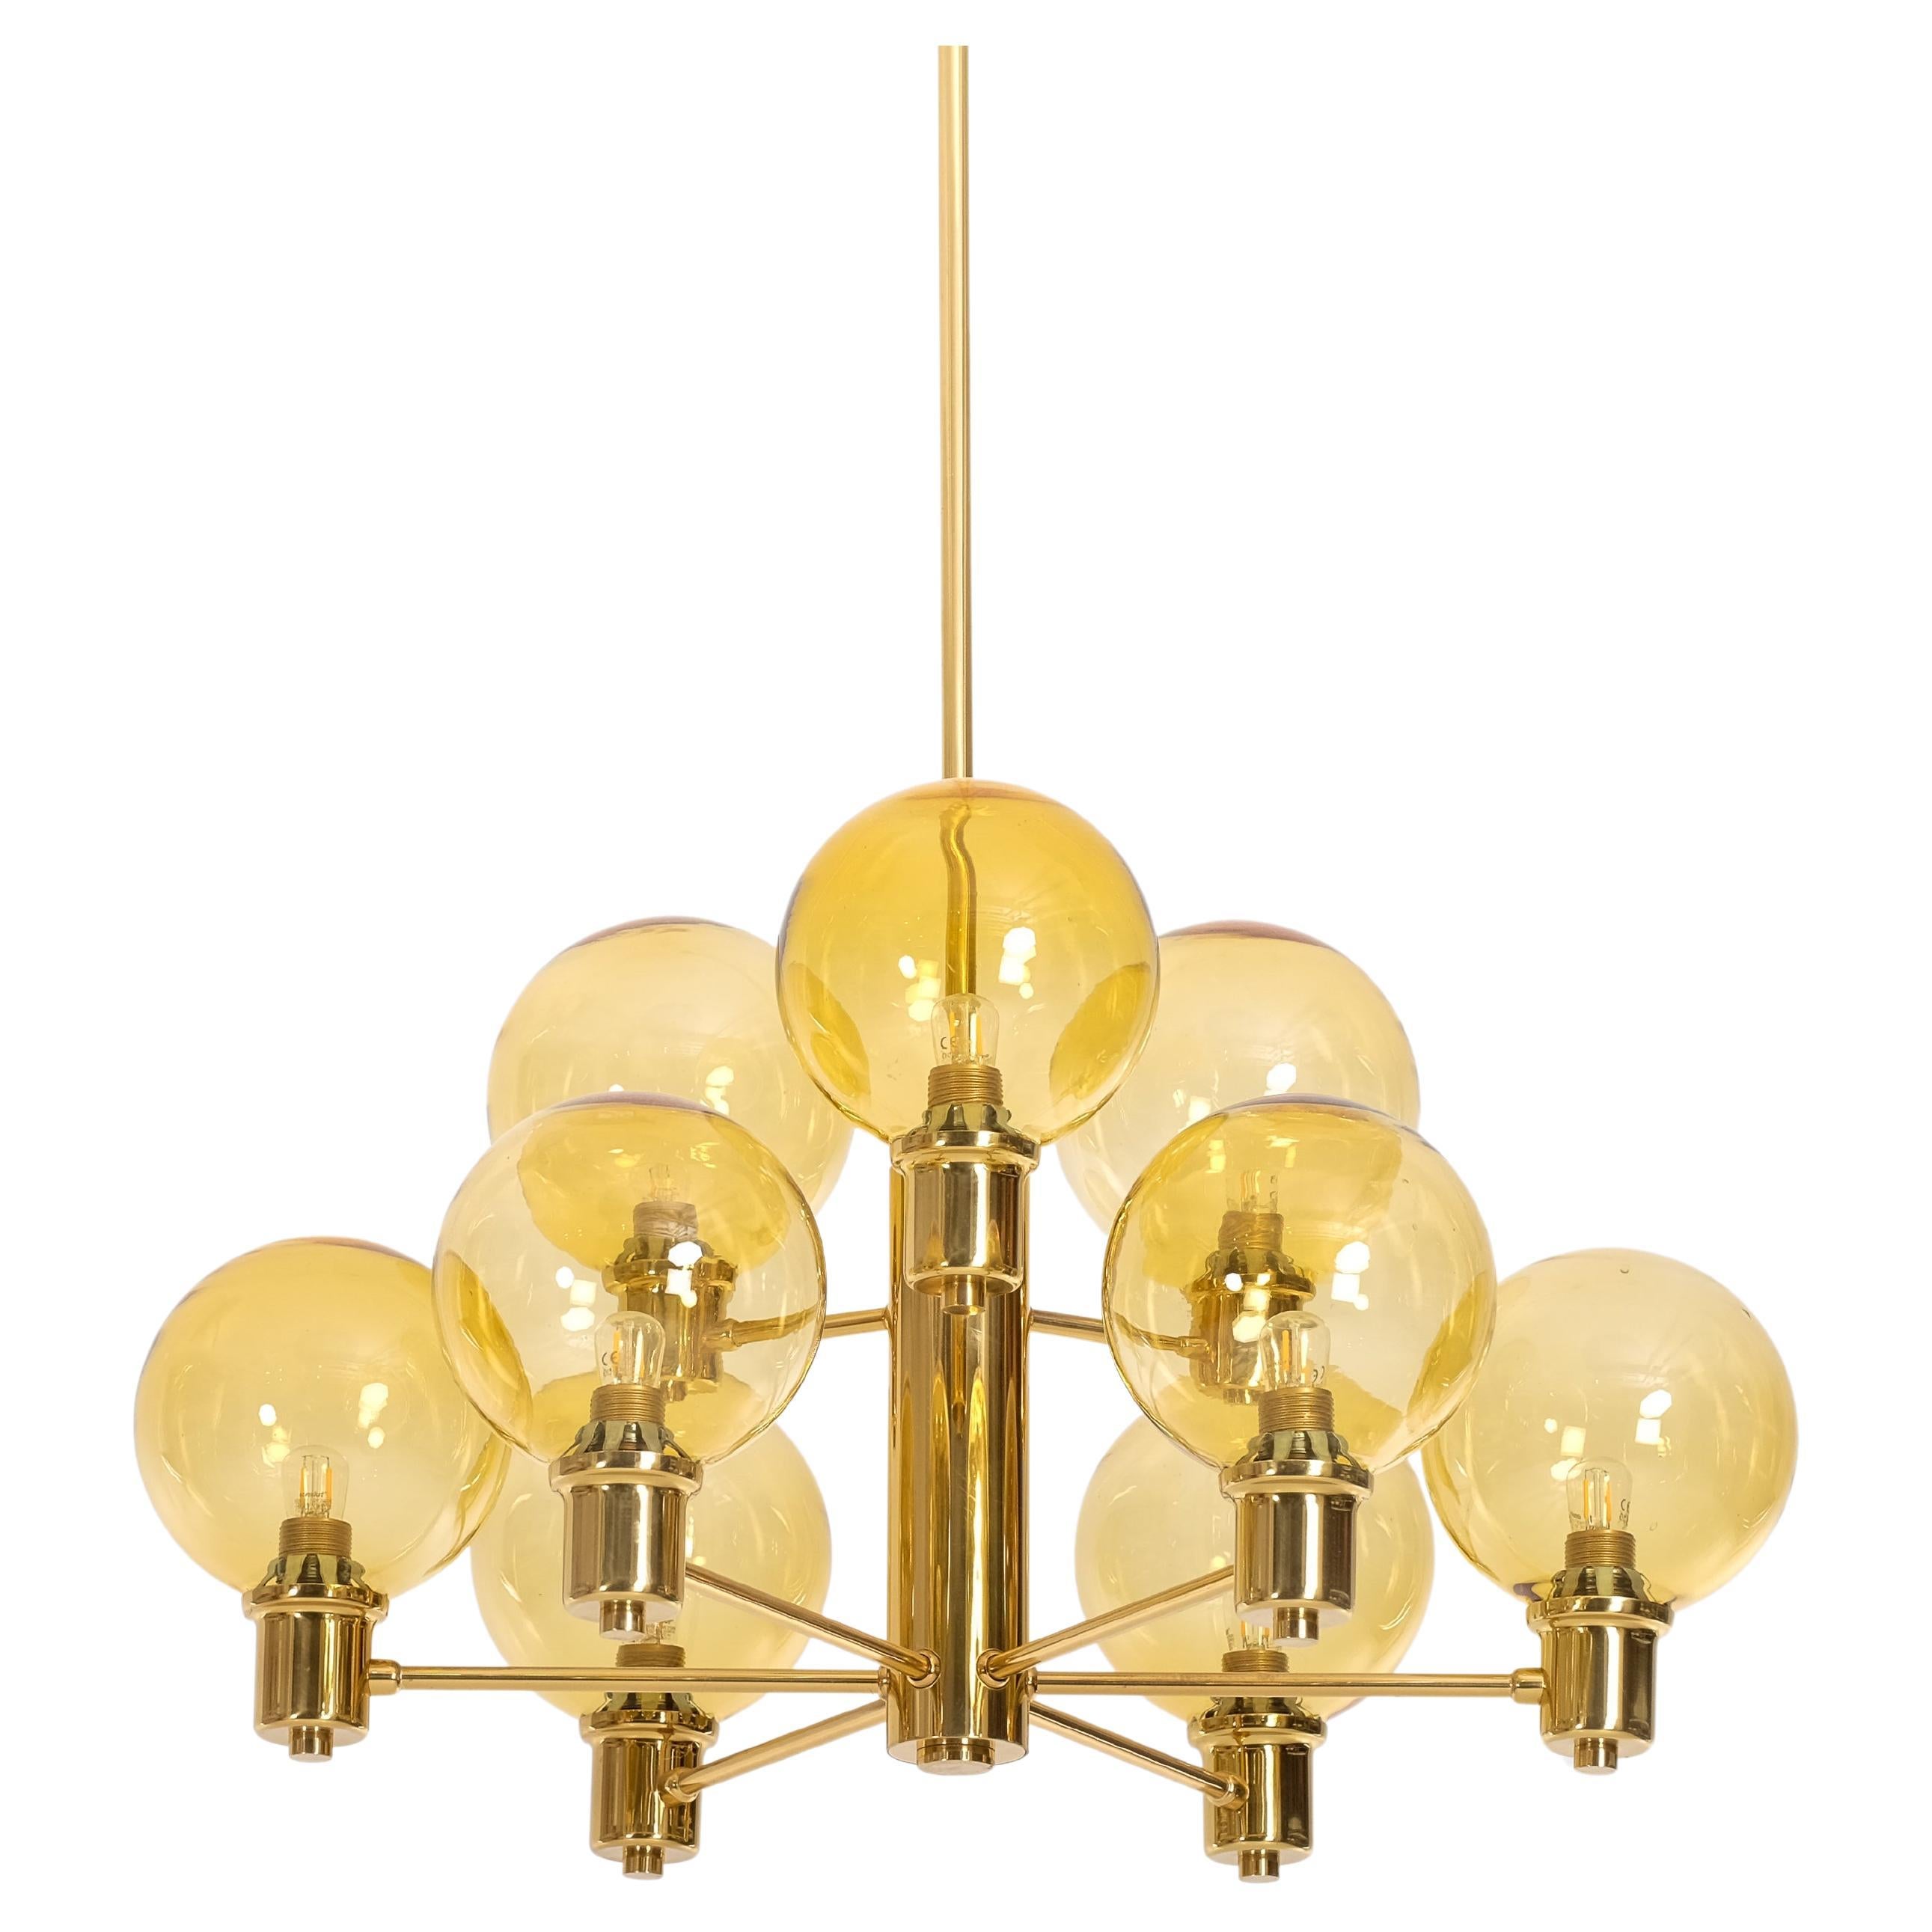 Set of 4 brass & glass chandeliers, Sweden, 1960s